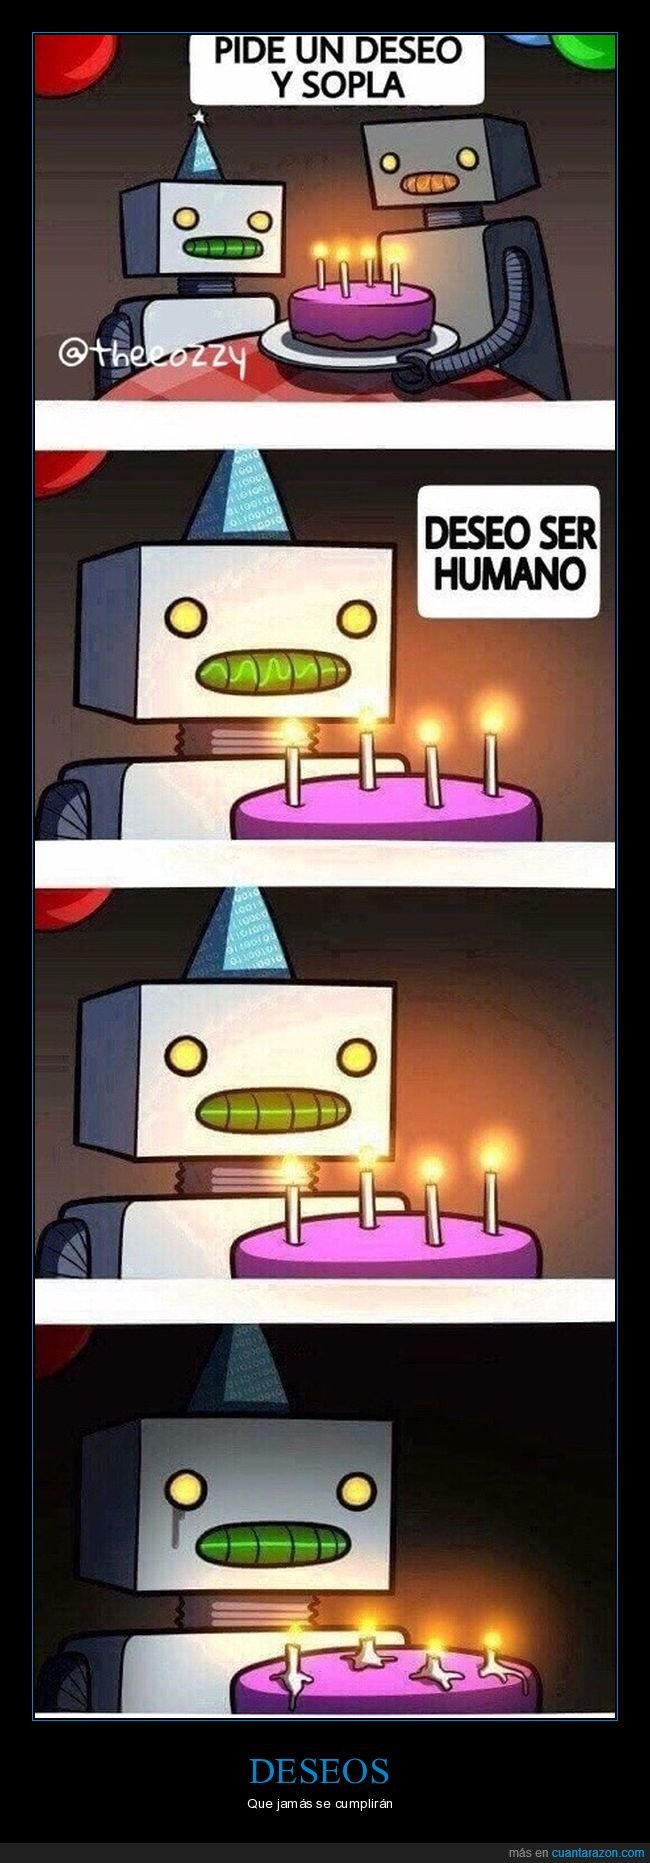 robot,cumpleaños,velas,deseo,soplar,humano